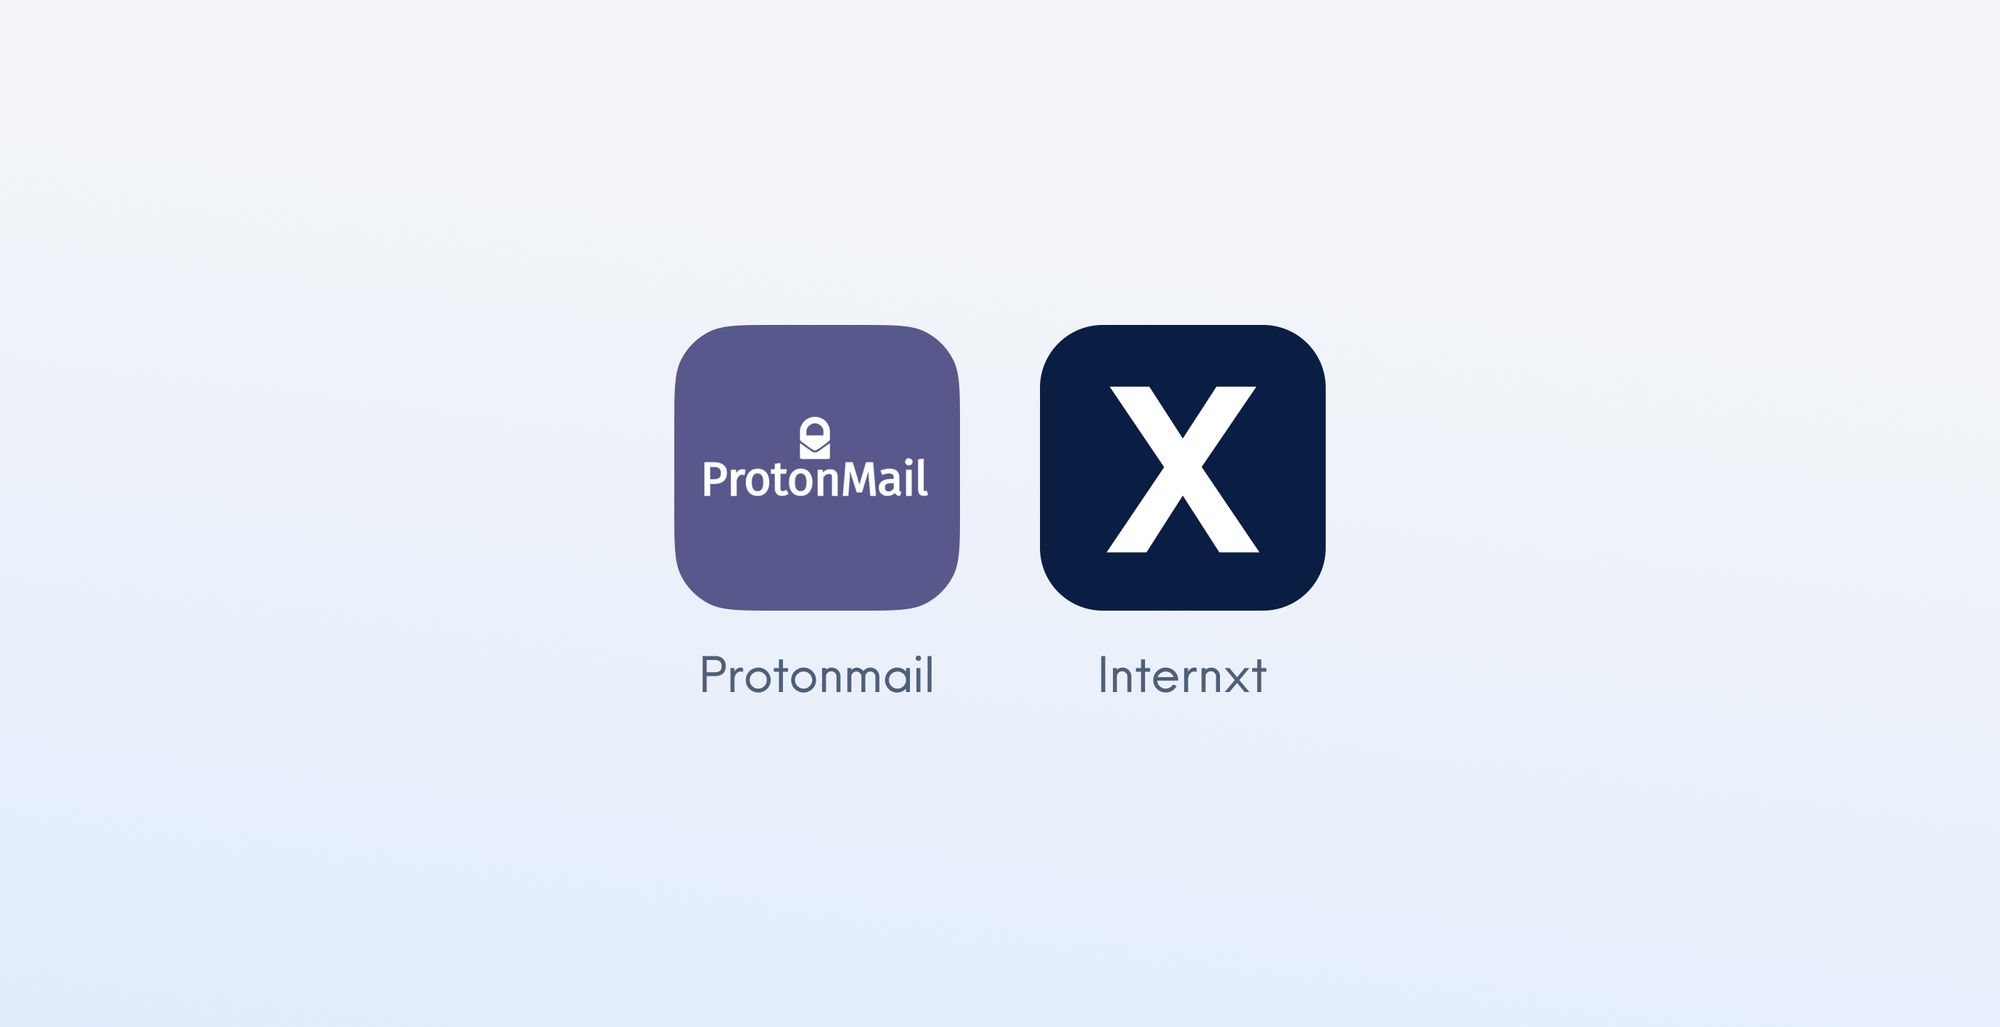 Internxt Logo and Protonmail Logo